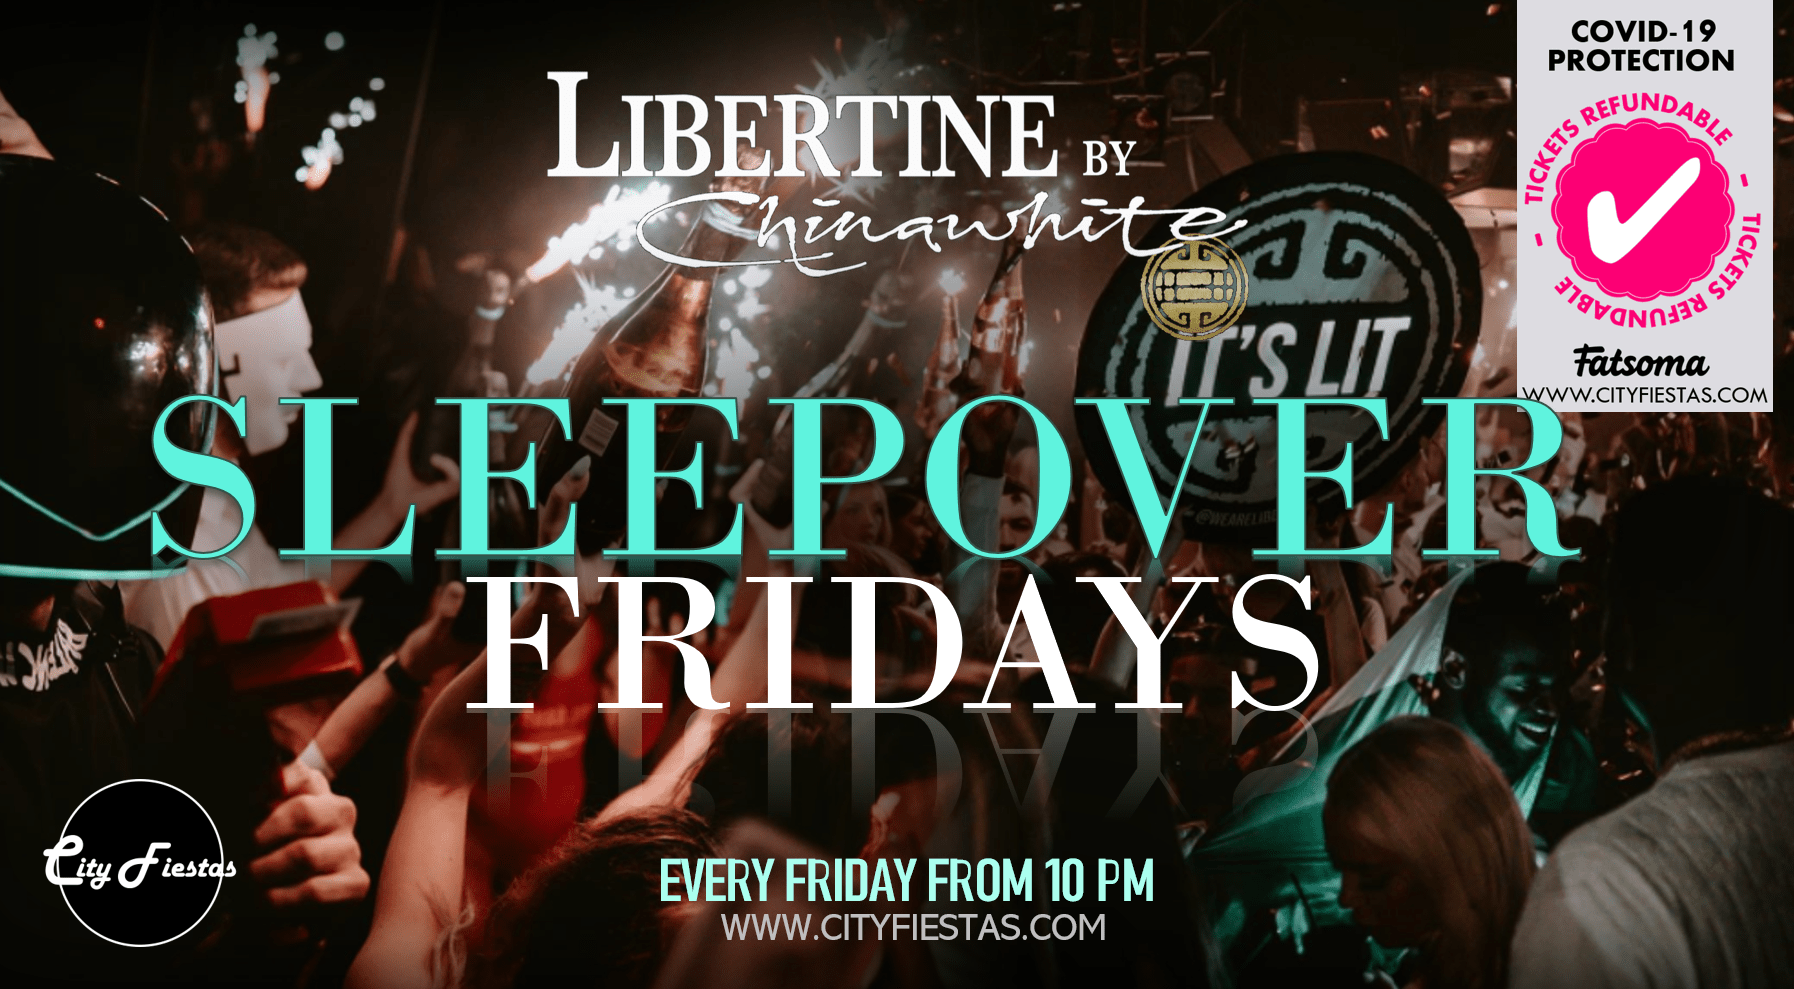 SLEEPOVER FRIDAYS at Libertine Nightclub + 1 FREE DRINK 🍸